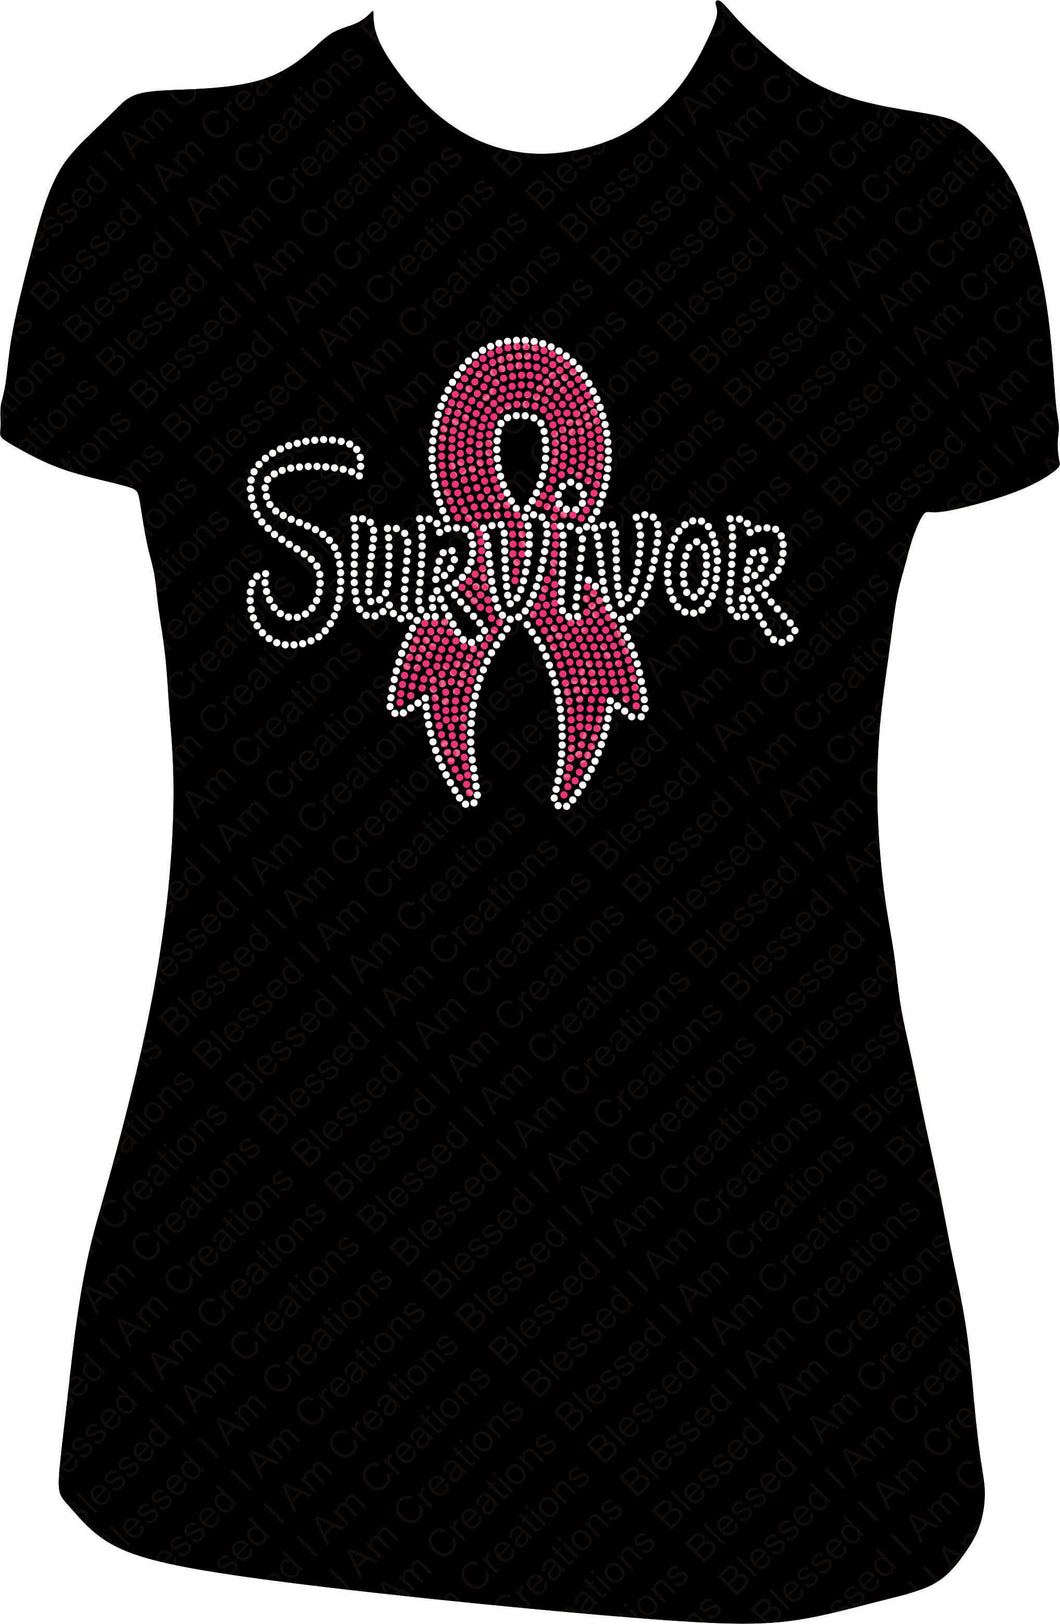 Suvivor Rhinestone Shirt, Cancer Awareness Shirt